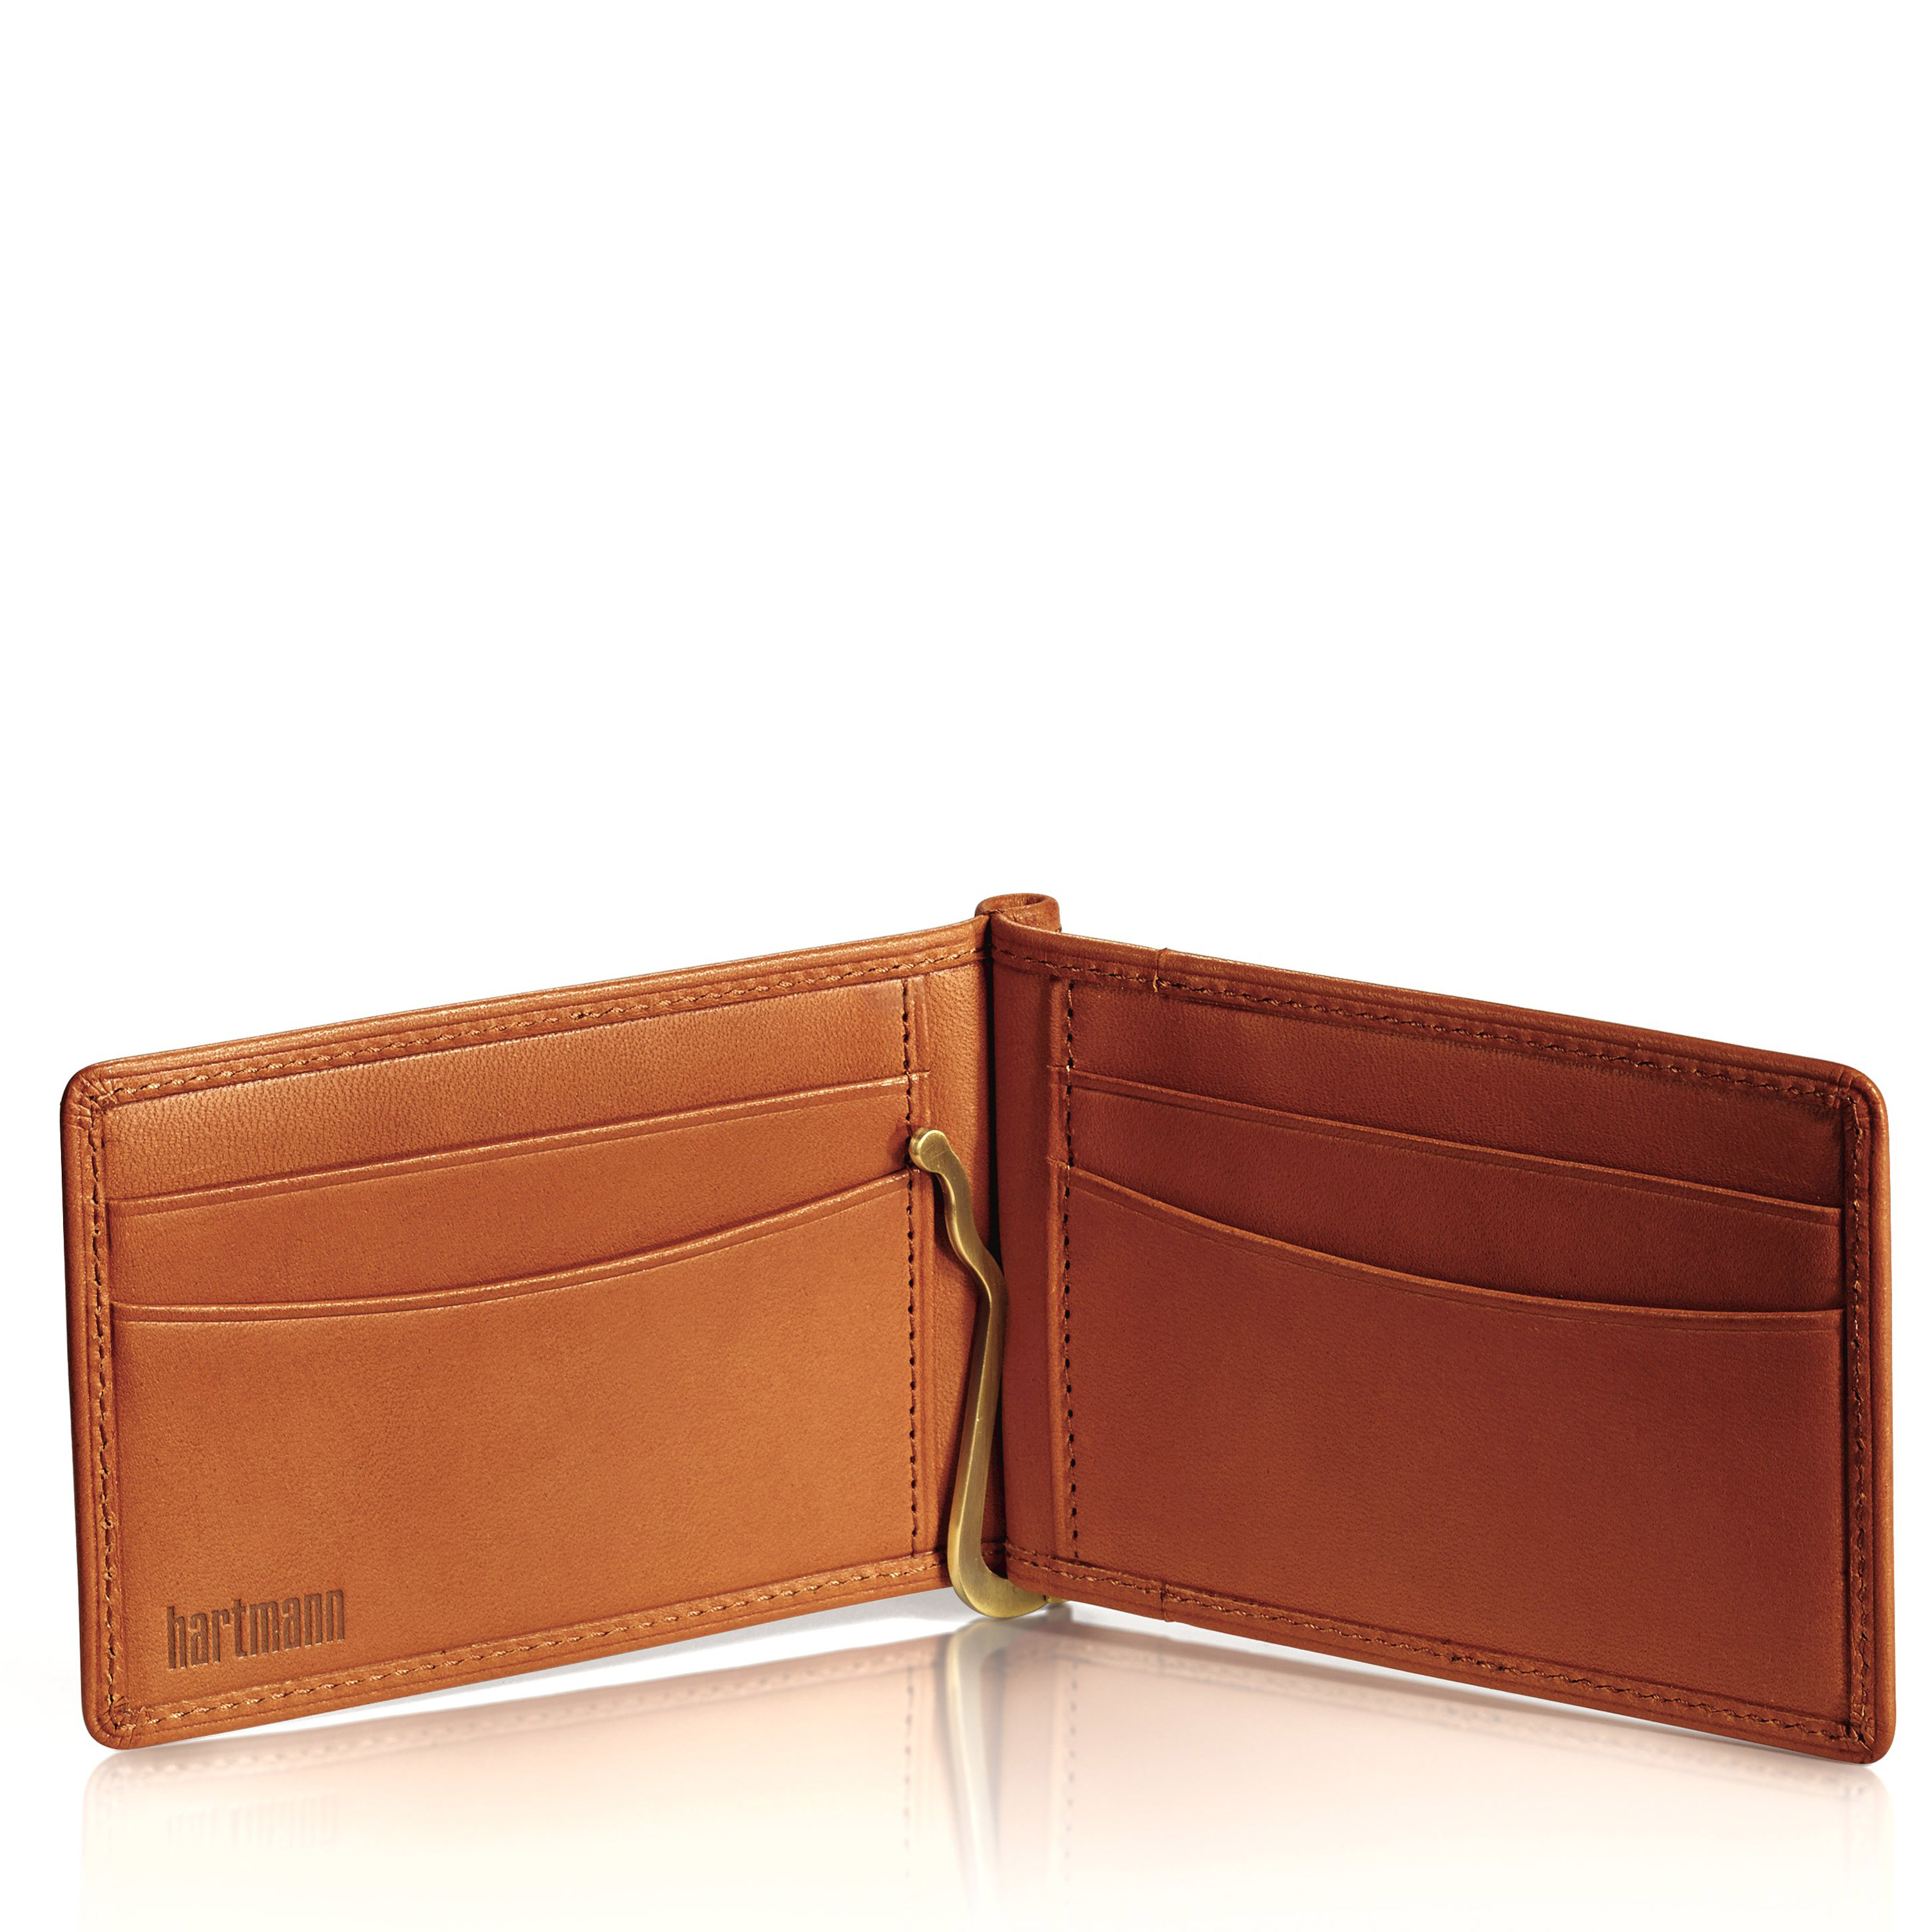 Hartmann Belting Wallet with Flip Clip